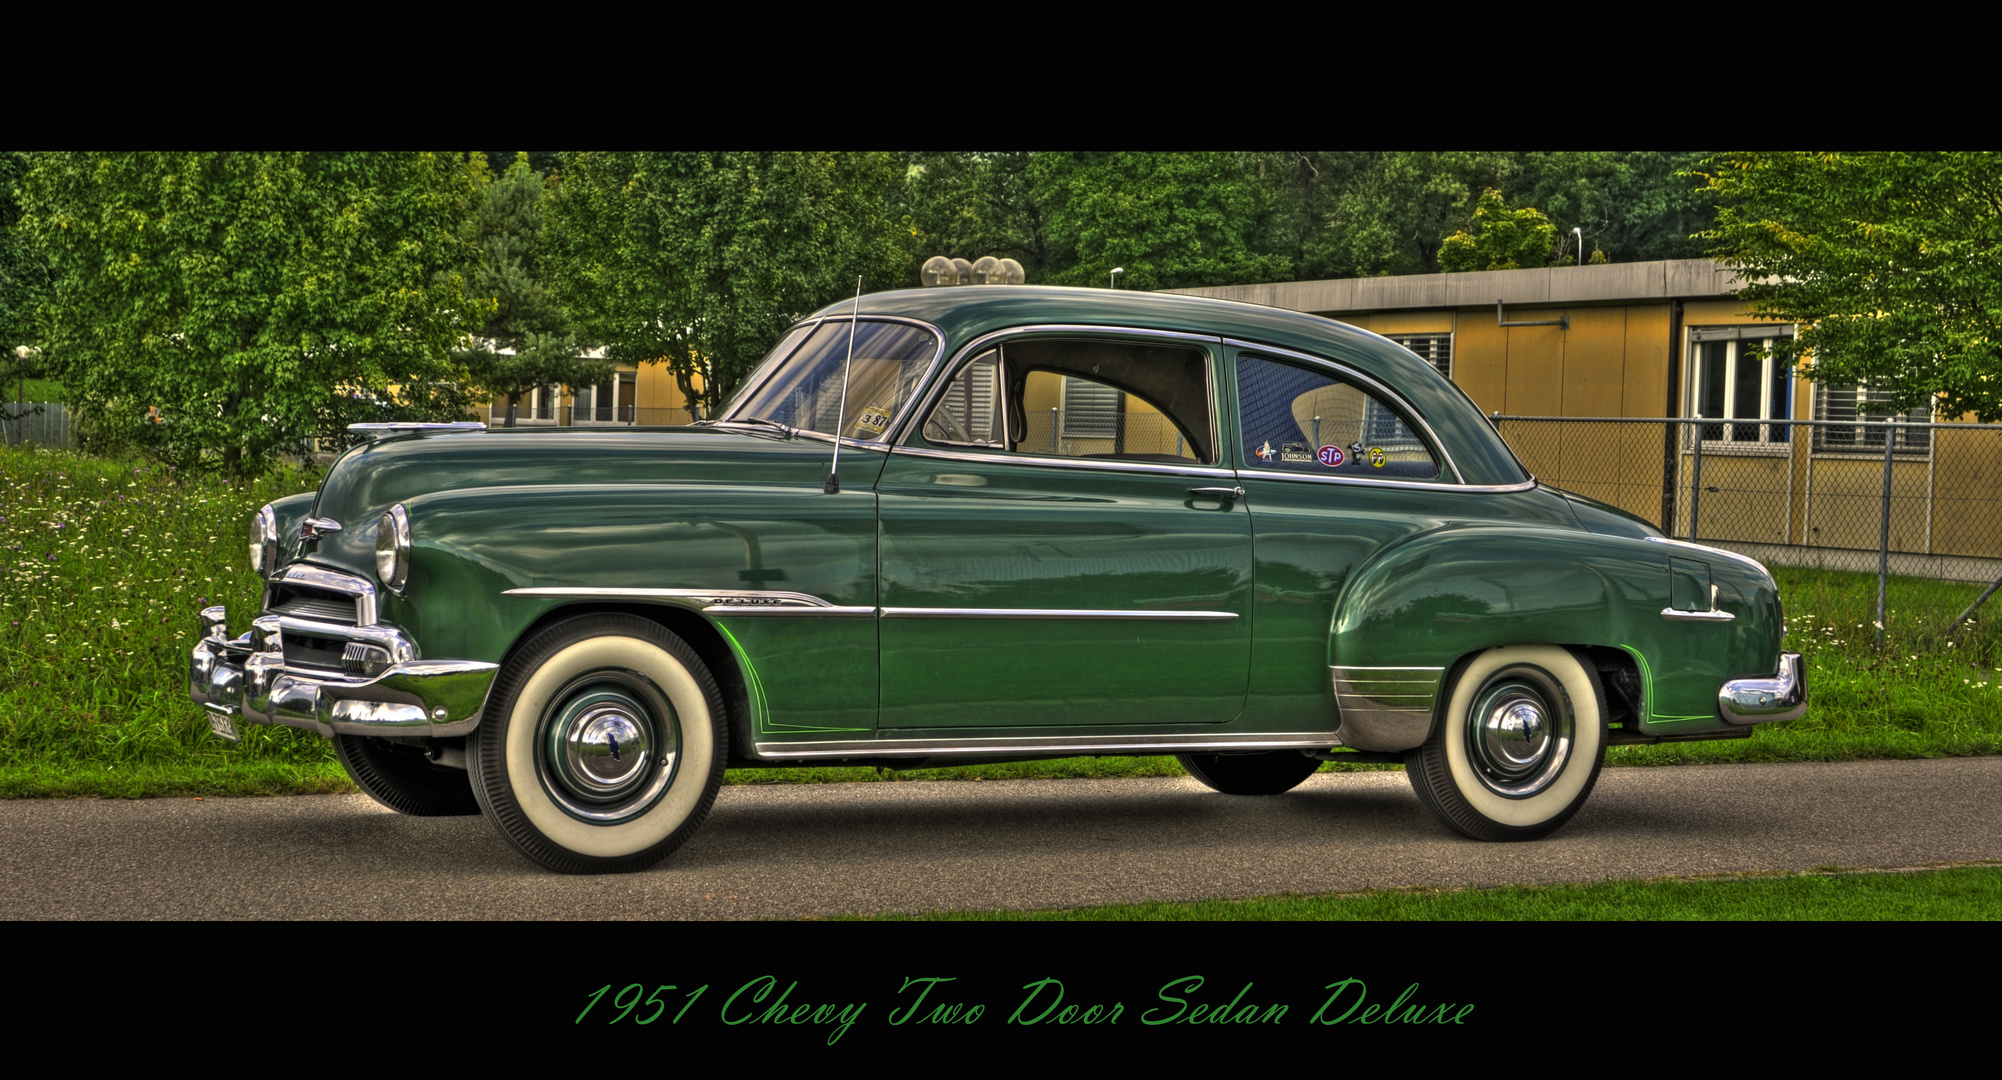 1951 Chevy